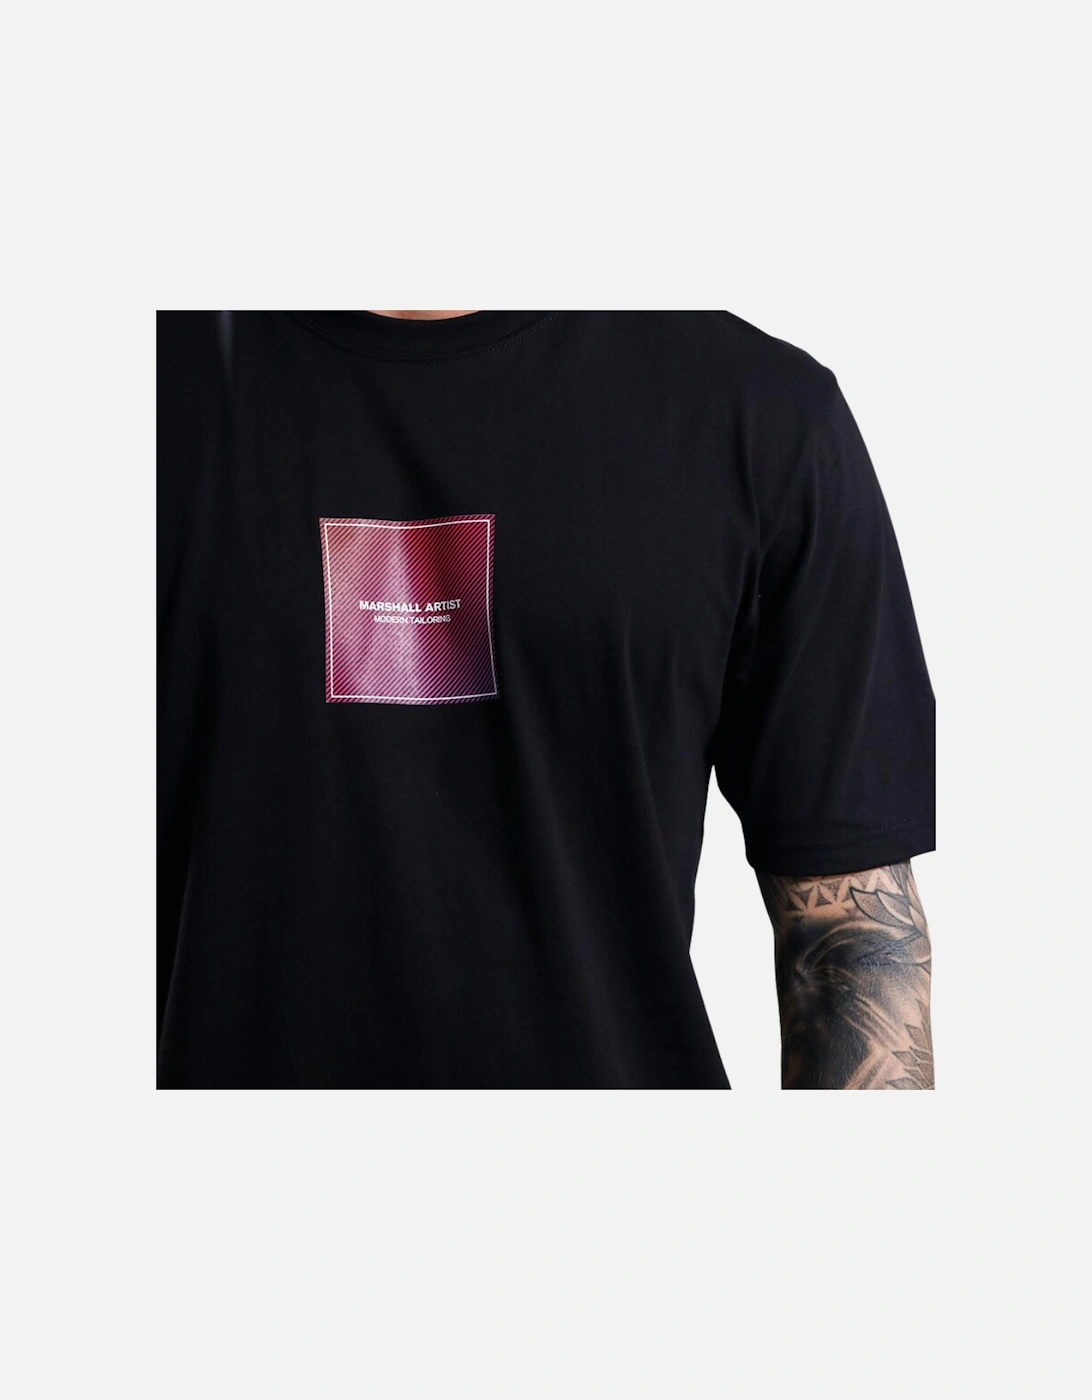 Linear Box T-Shirt - Black